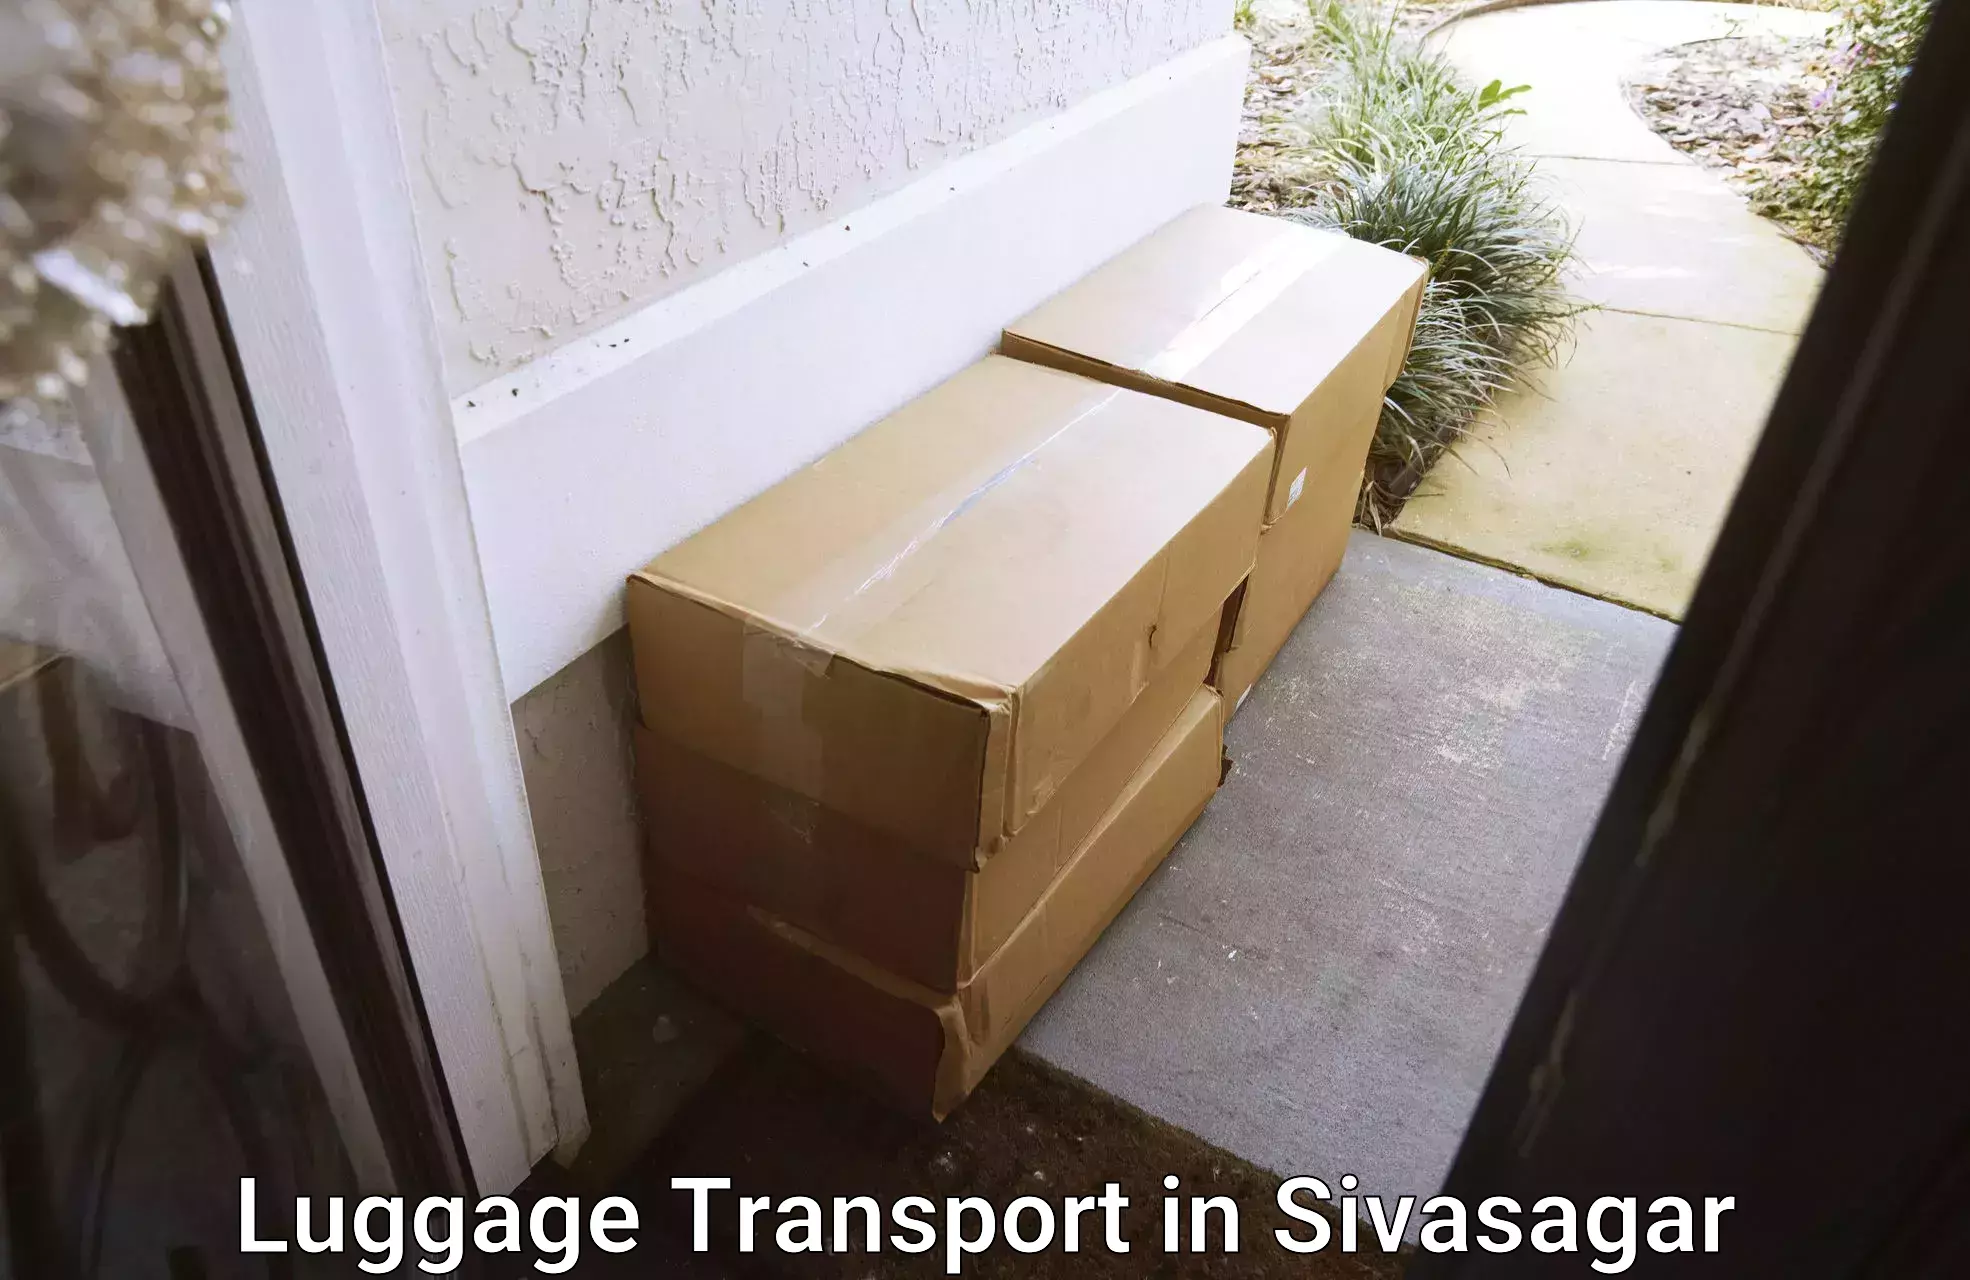 Efficient baggage transport in Sivasagar